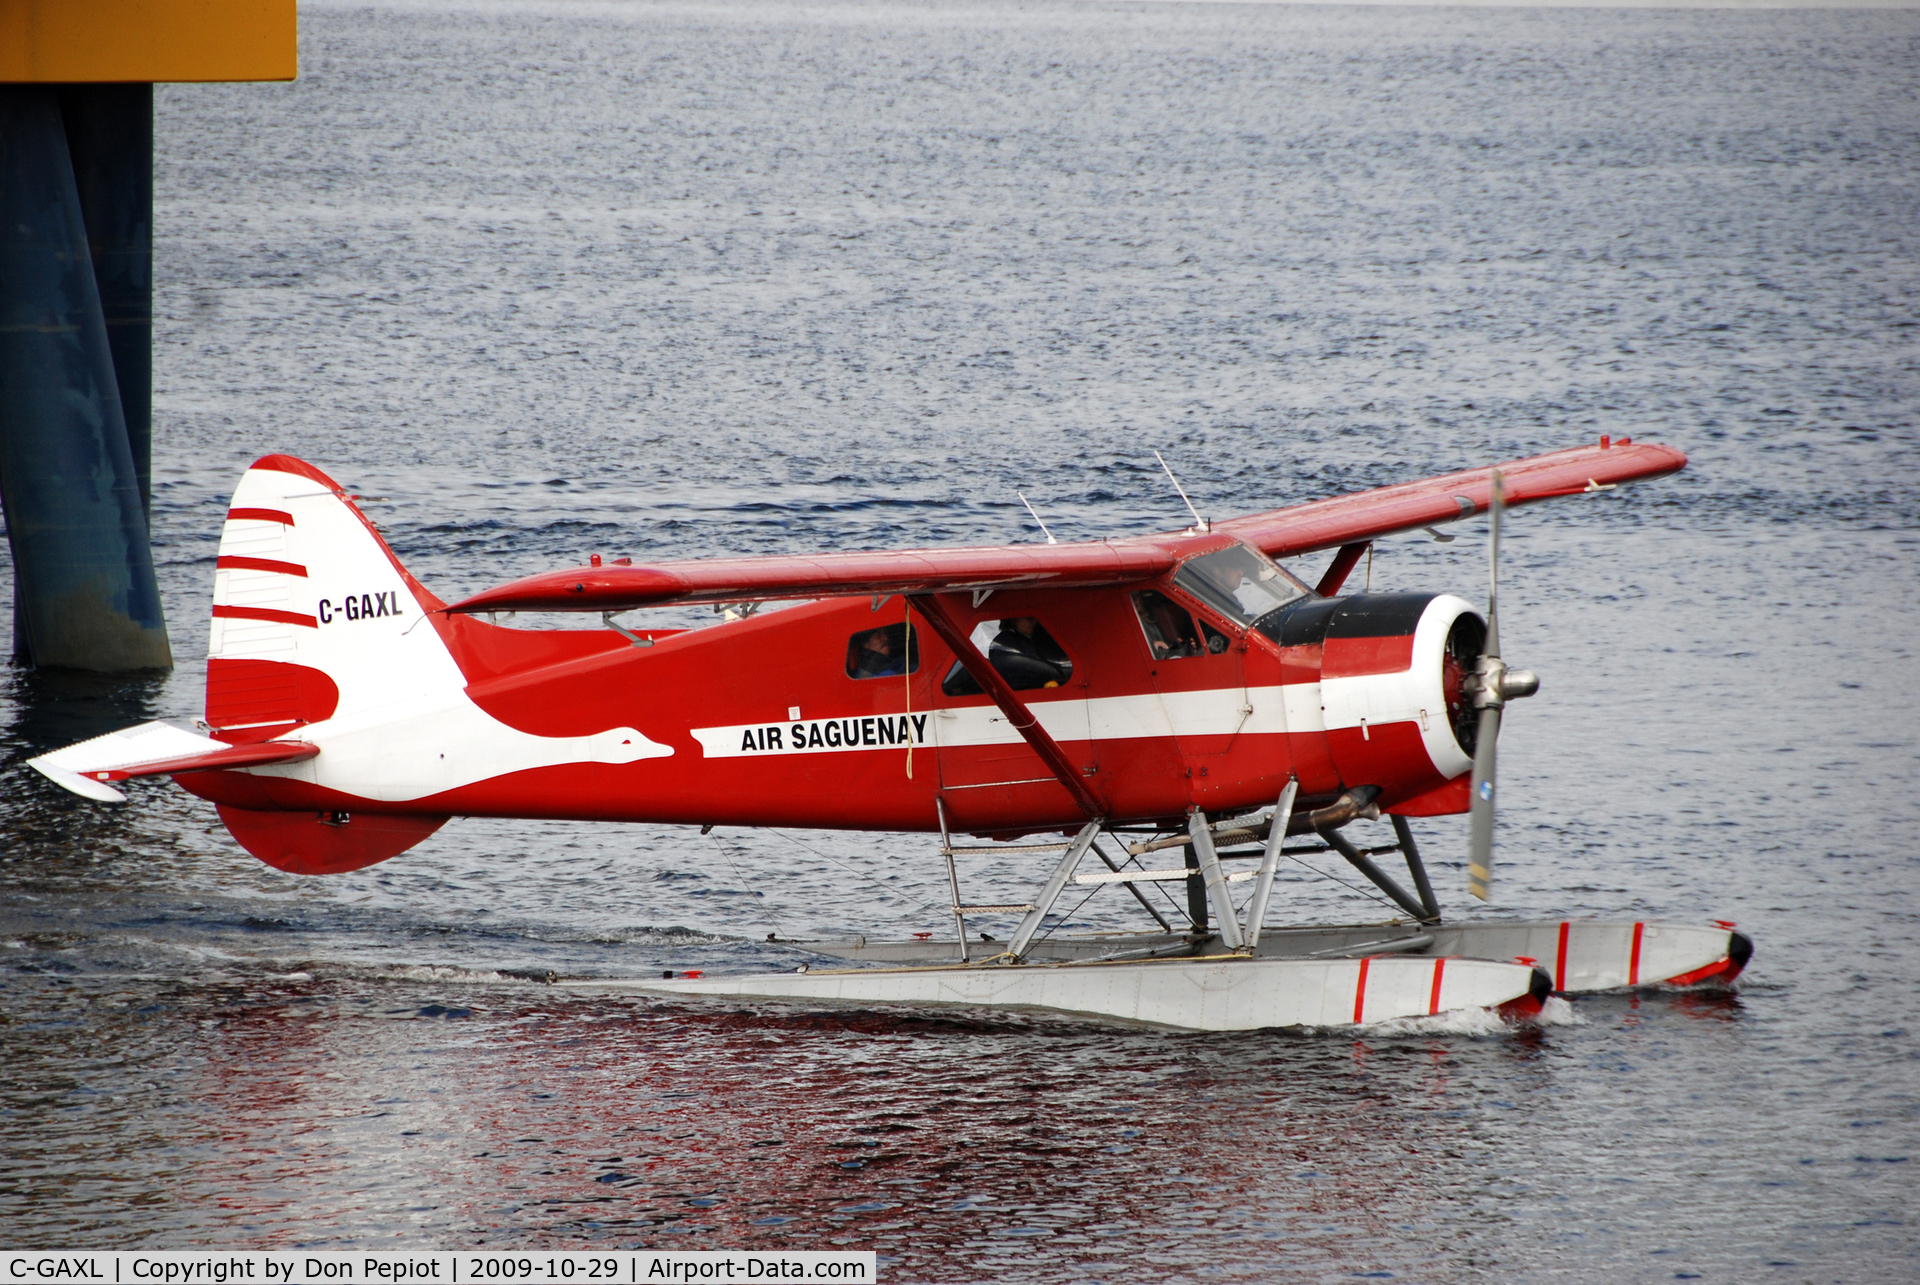 C-GAXL, 1957 De Havilland Canada U-6A Beaver C/N 1032, Used for site seeing in Saguenay Harbor, Quebec, Canada